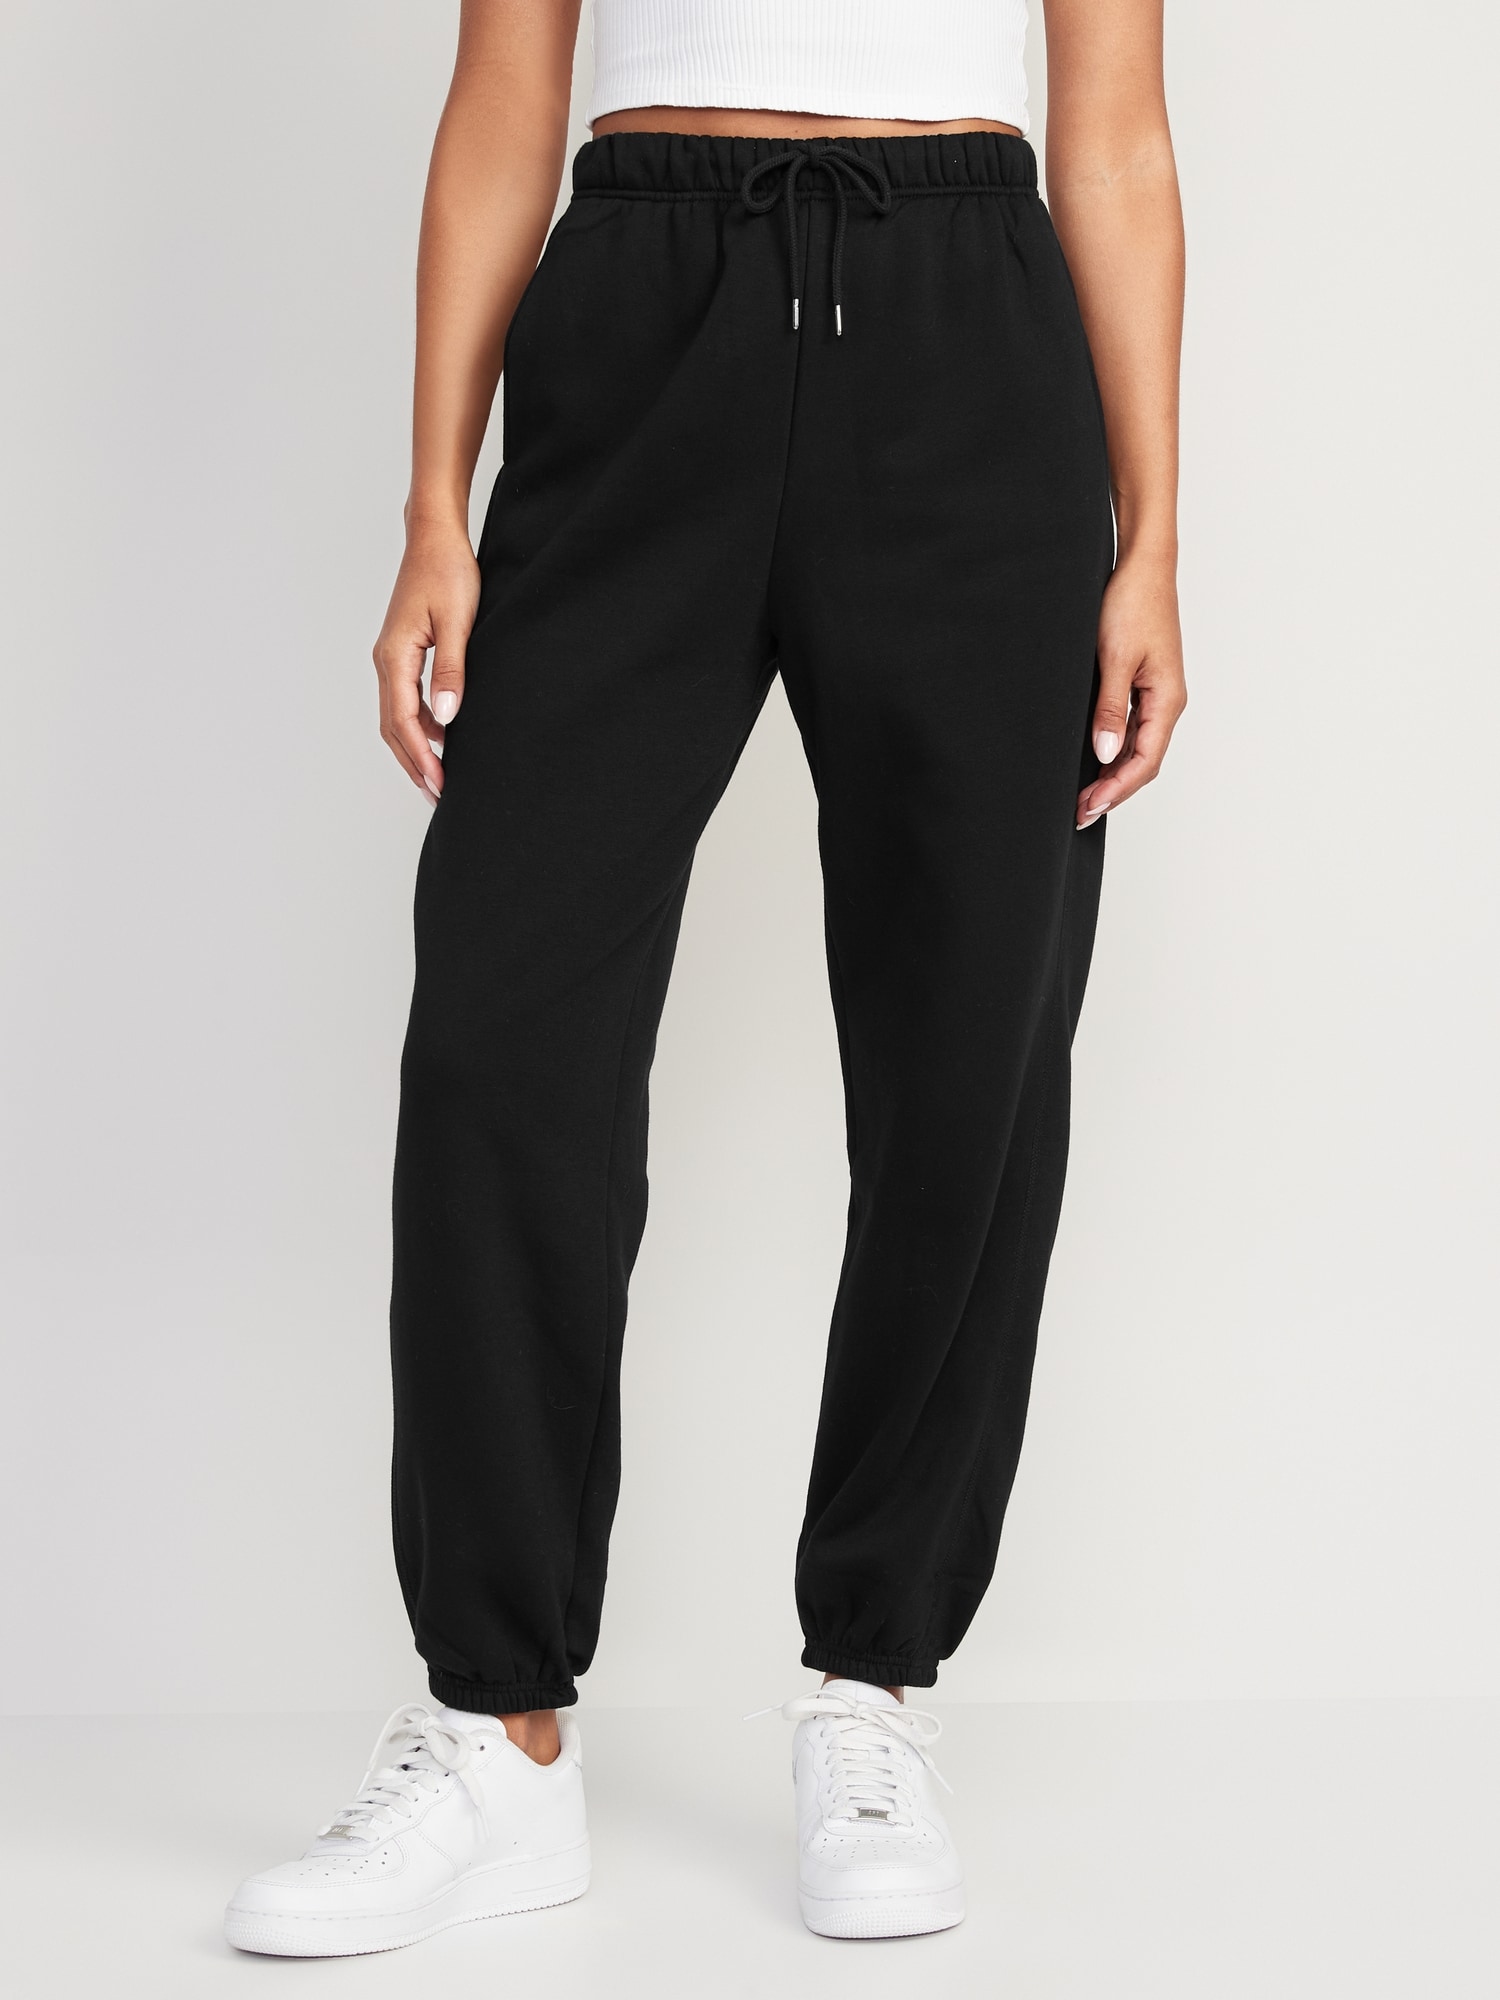  Womens Plus Size Fleece Lined Sweatpants Warm Fleece Joggers  Pants Active Track Pant Side Pockets Black-Navy Stripe 3X